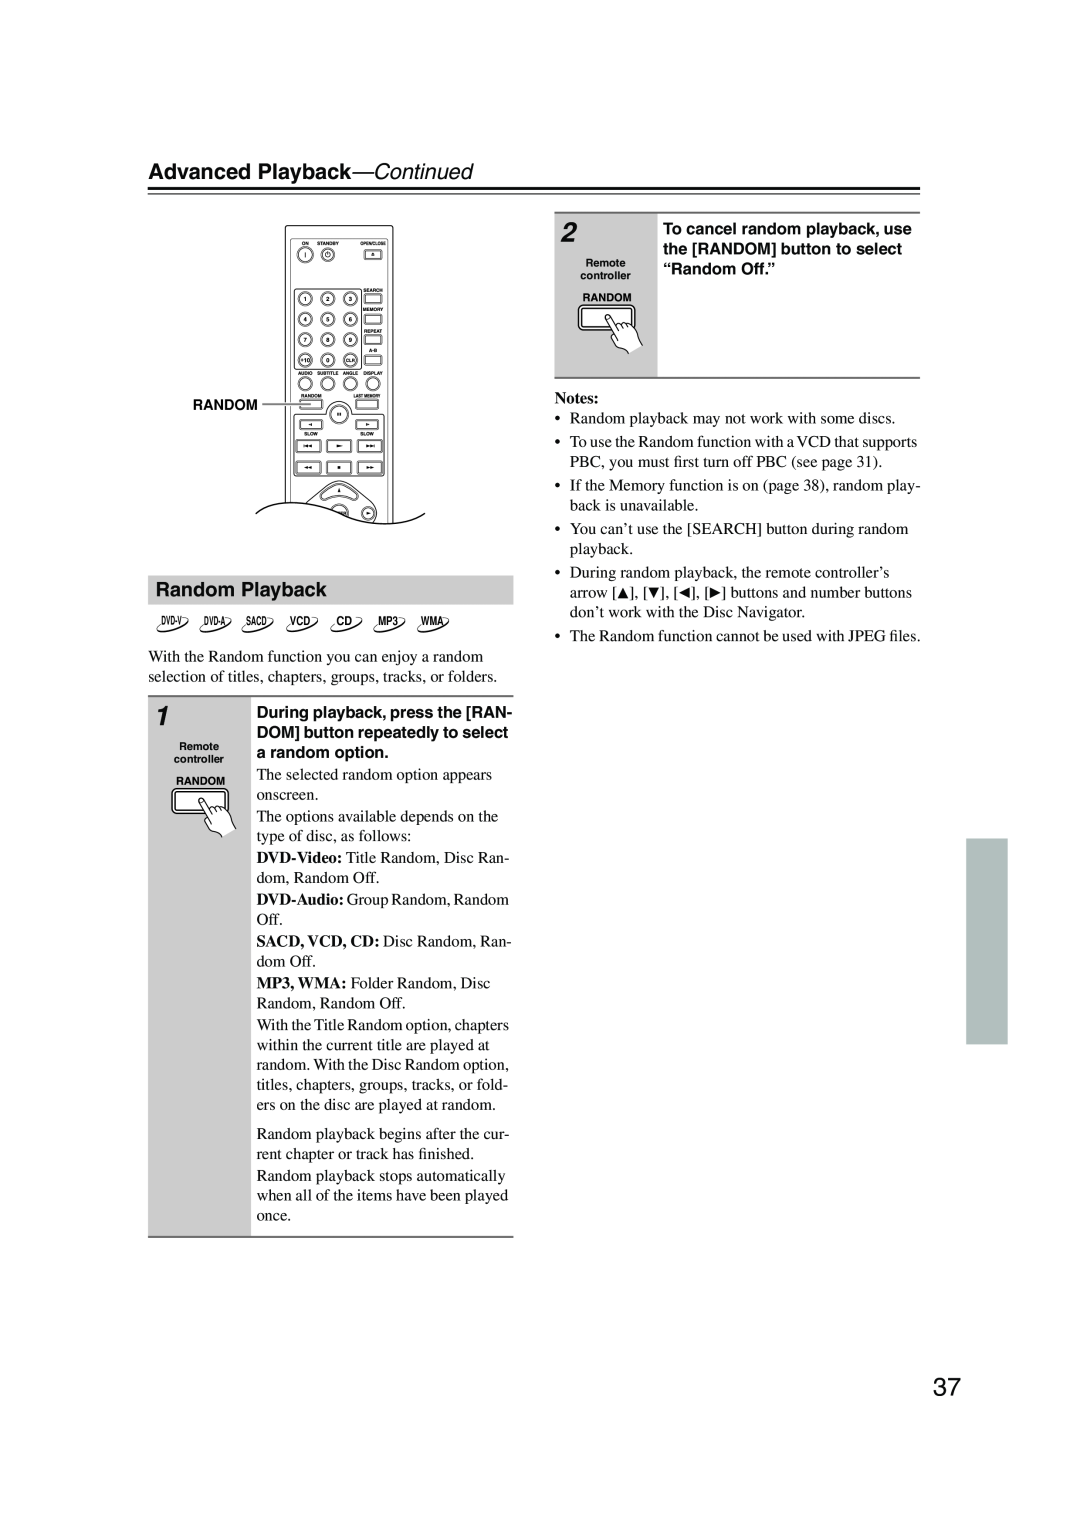 Onkyo DV-SP504E instruction manual Random Playback, Advanced Playback-Continued, SACD, VCD, CD Disc Random, Ran- dom Off 